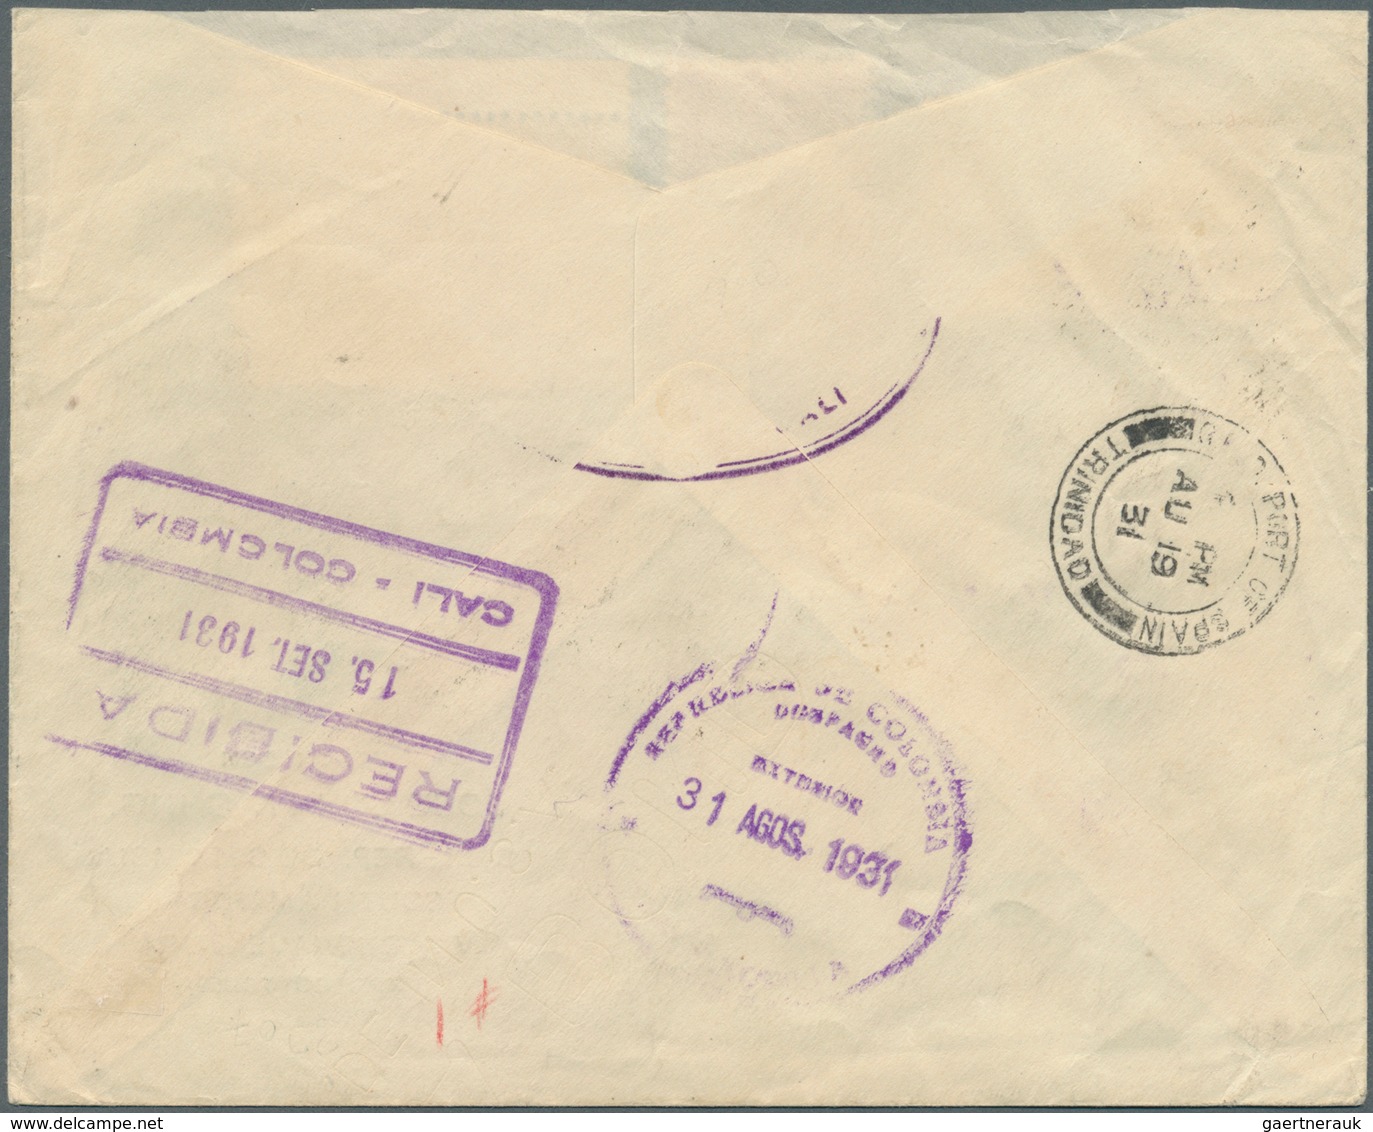 Kolumbien - Eilmarken: 1931 EXPRESO TOBON: DOX Cover From Rio De Janeiro To Cali, Colombia Via Buena - Colombia